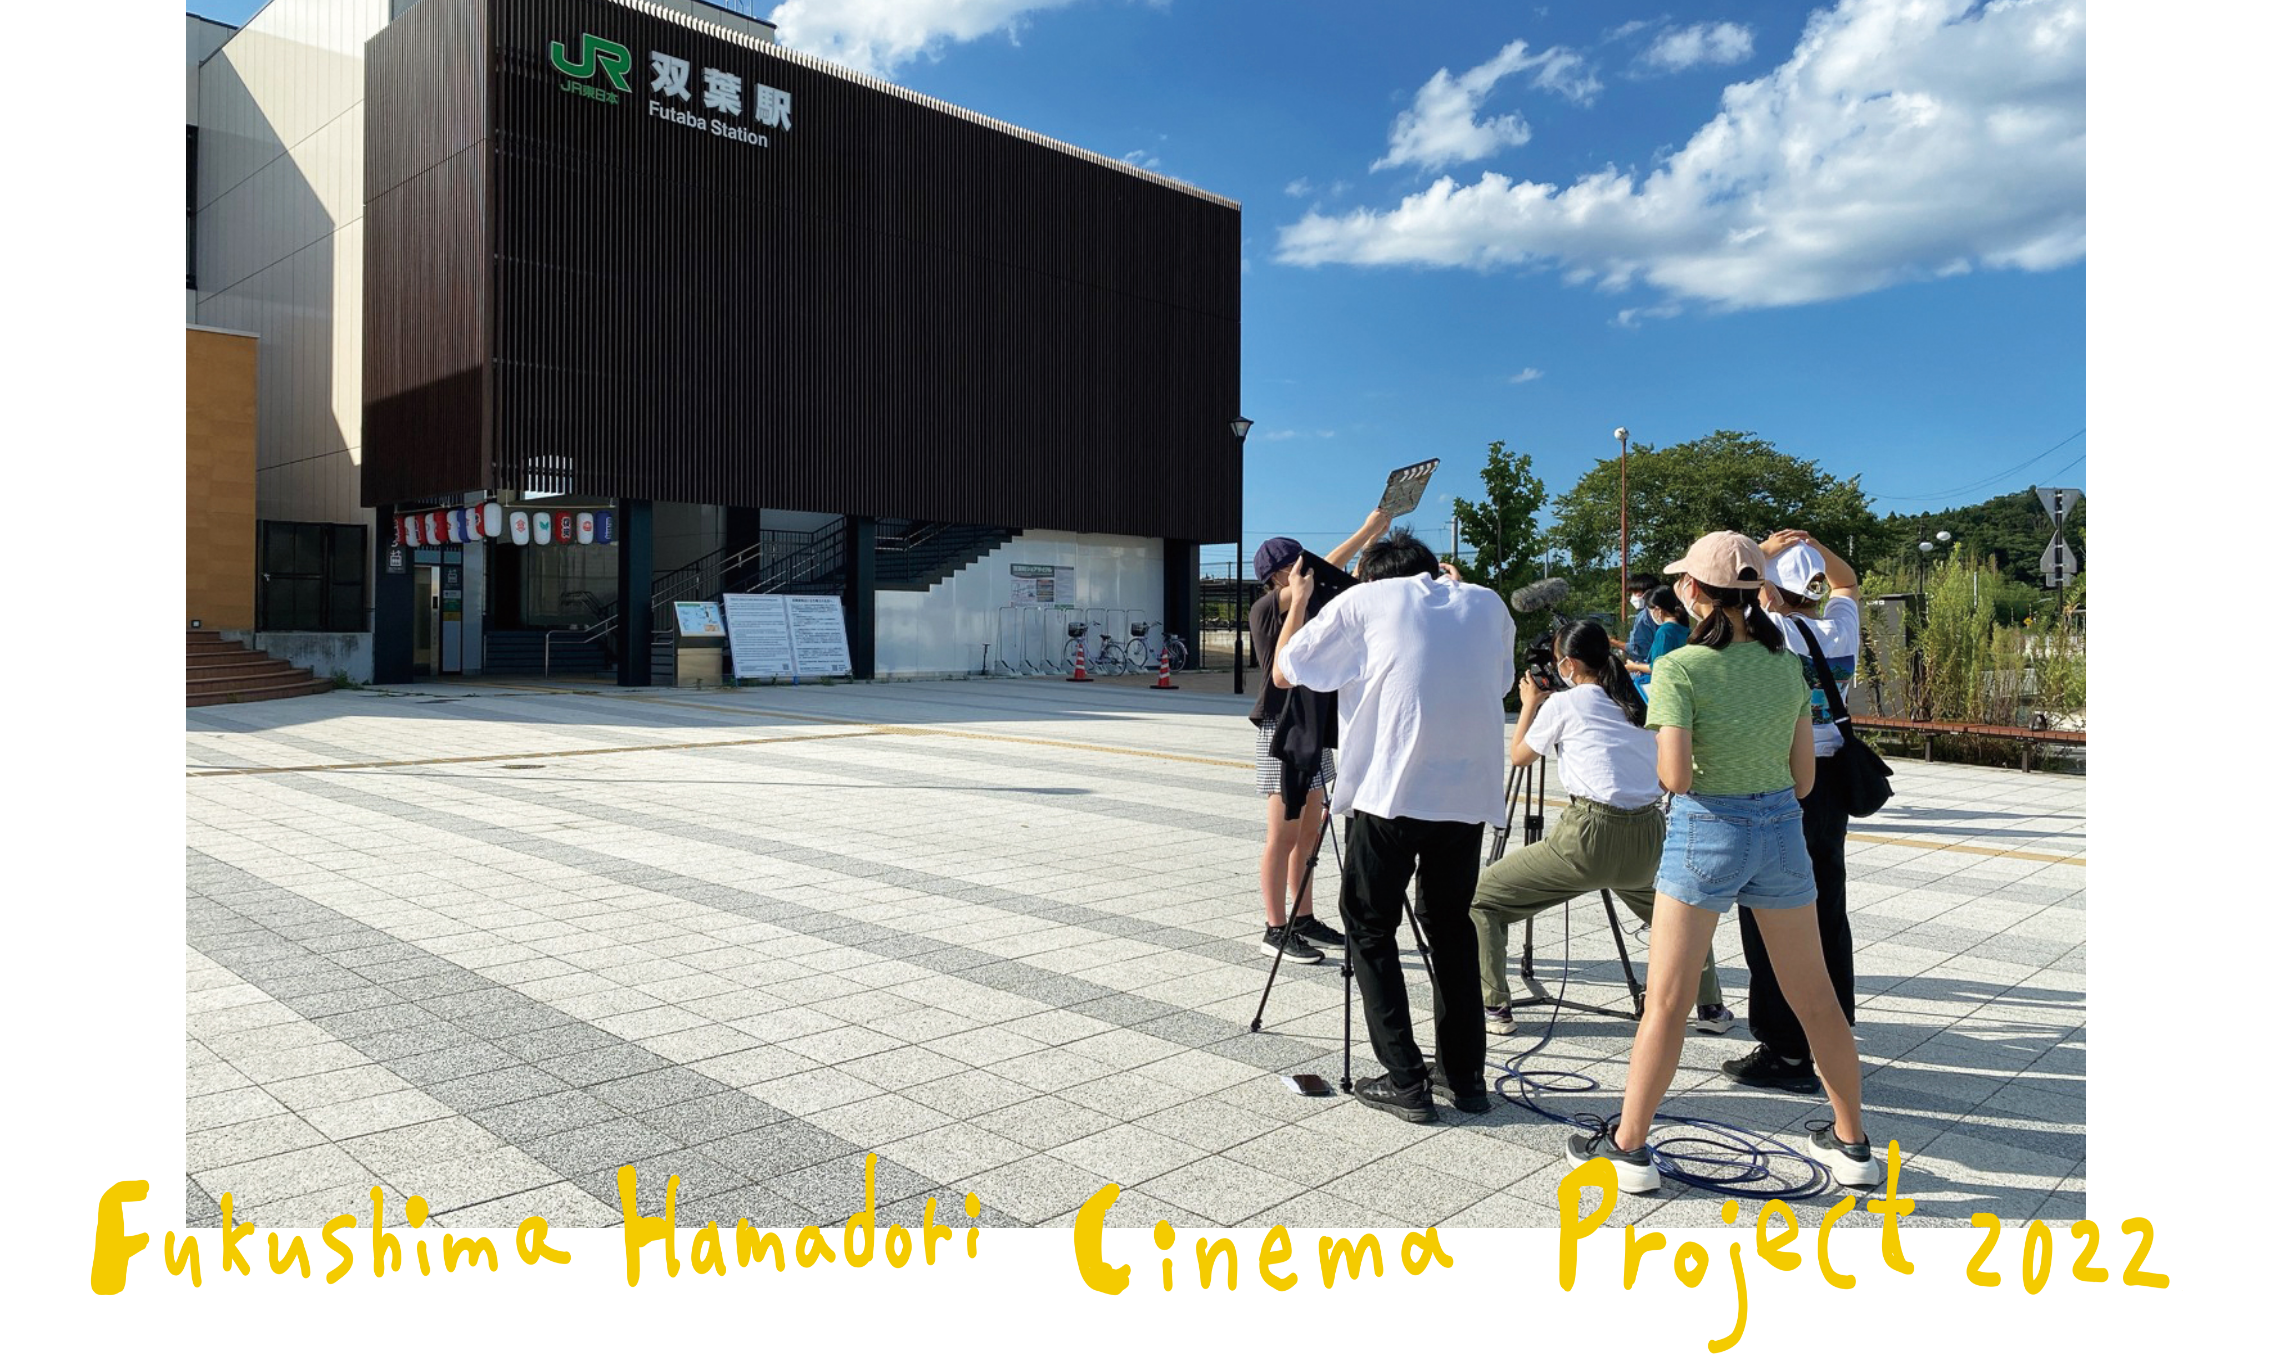 Fukushima Hamadori Cinema Project 2022